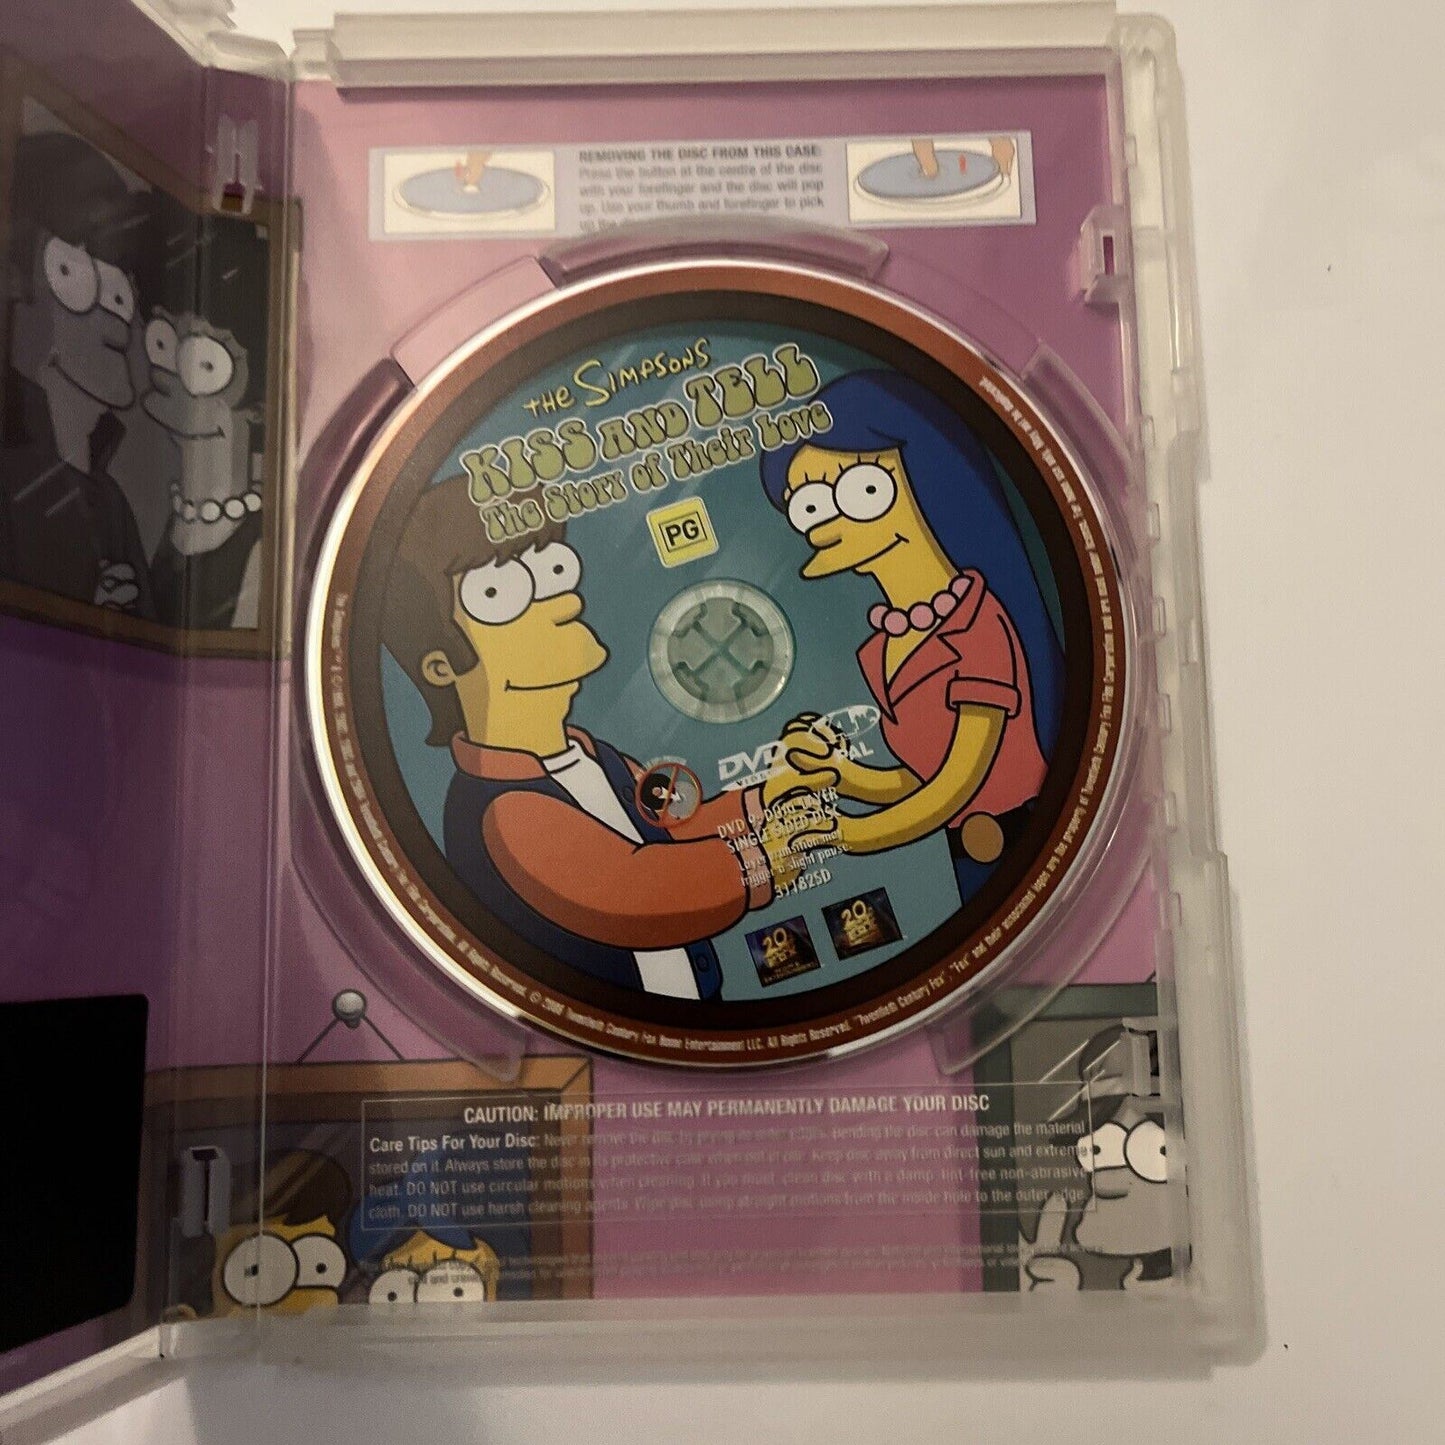 The Simpsons - Kiss & Tell (DVD, 2004) Region 4